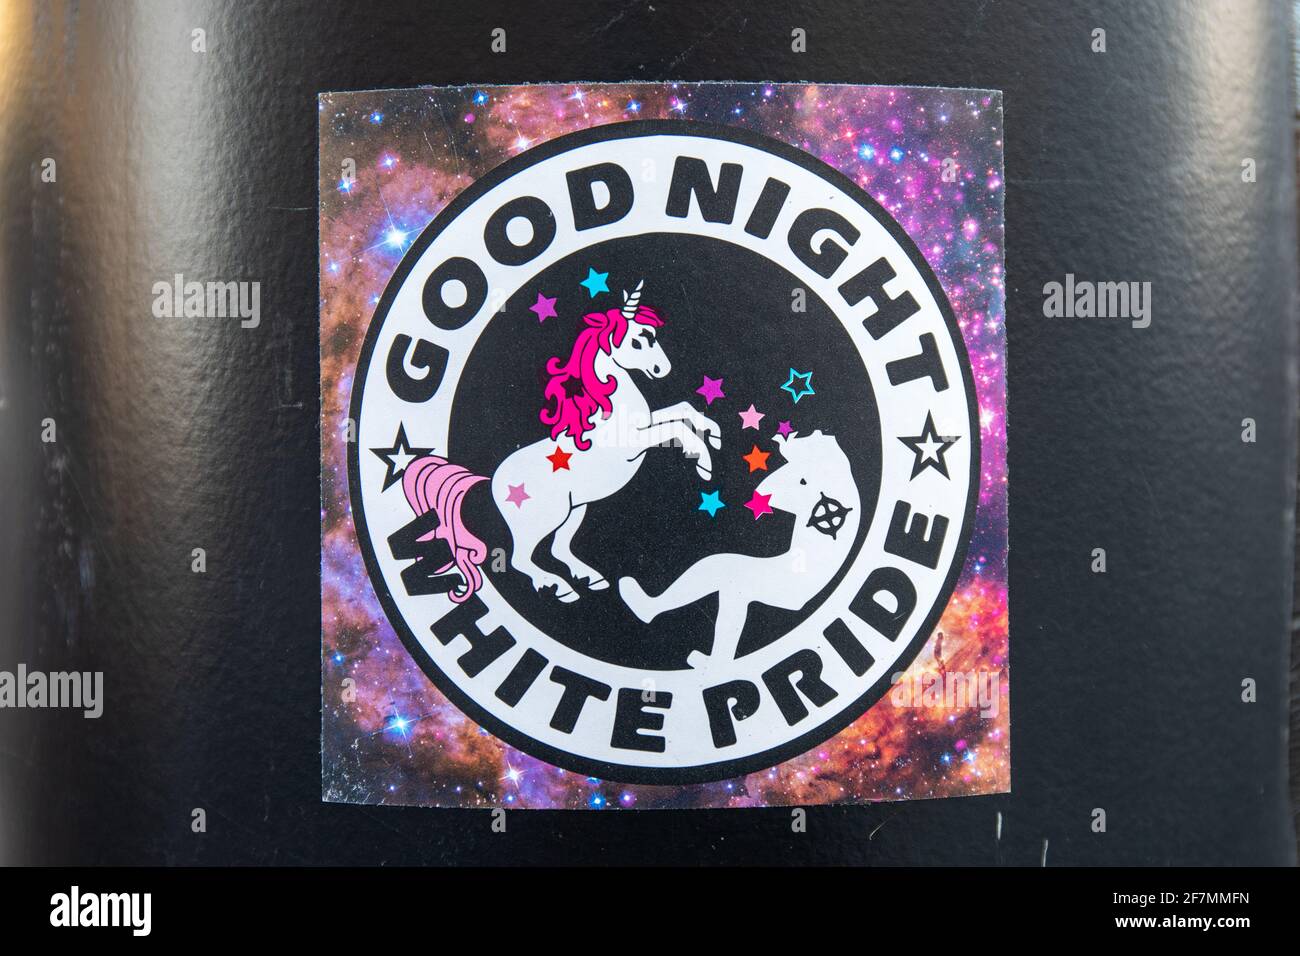 Good night white pride. Anti-racism sticker on a light pole in Helsinki, Finland. Stock Photo